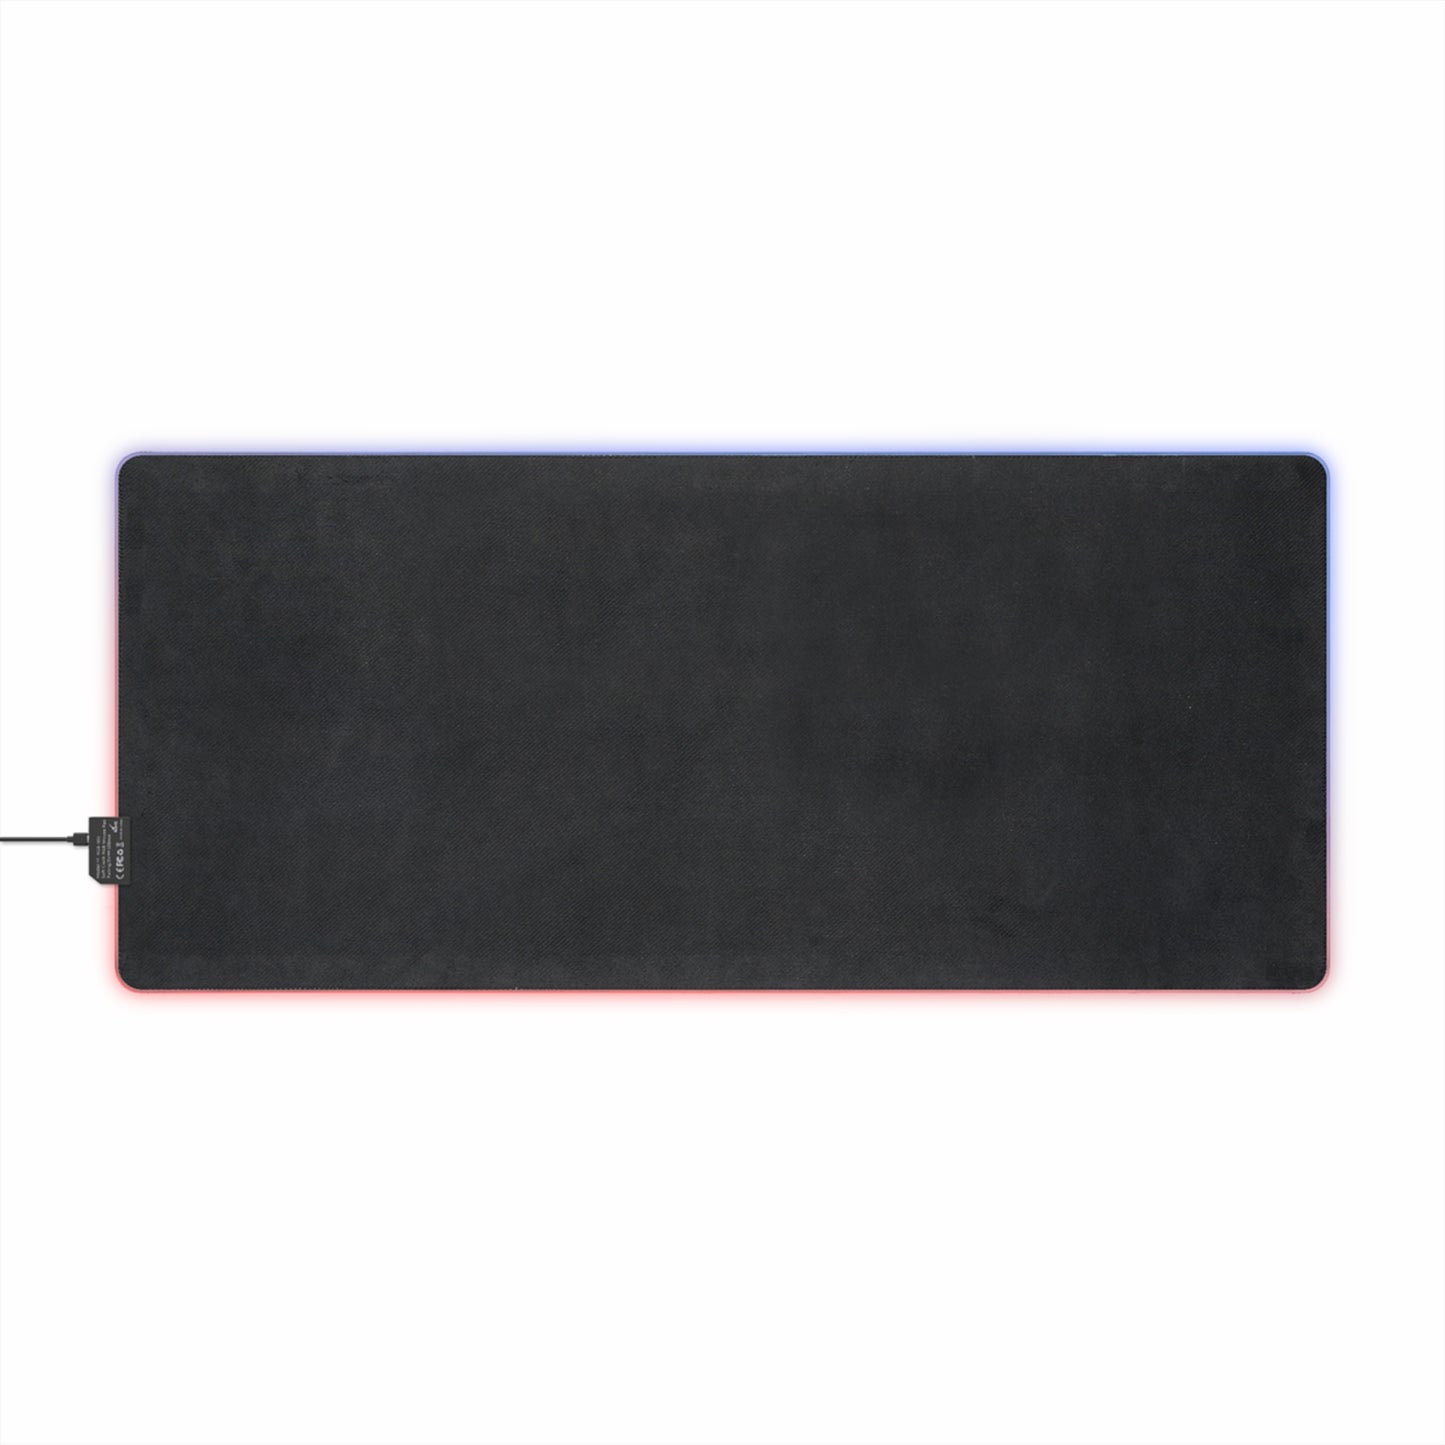 LED Gaming Mouse Pad (PIN Oasis Black)